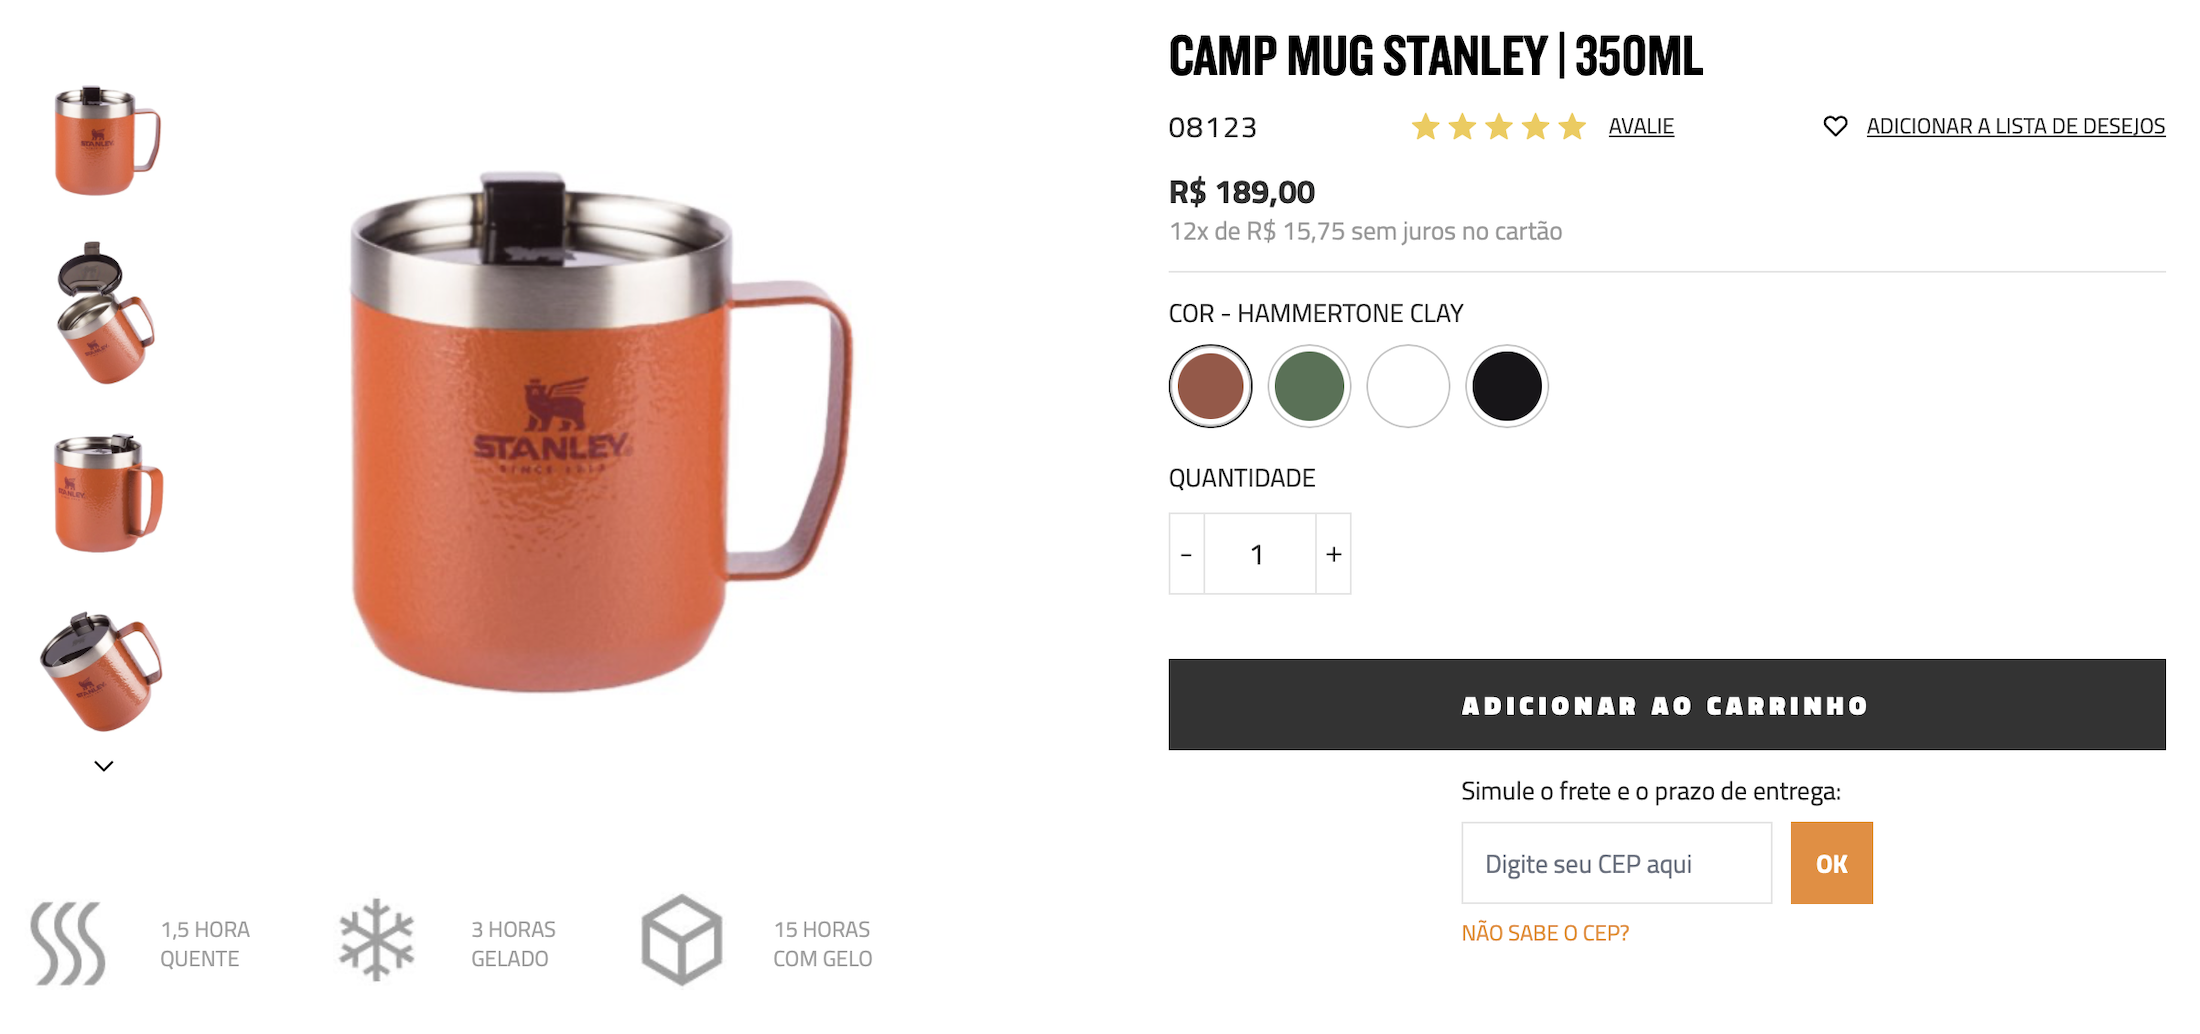 Stanley - Camp Mug.